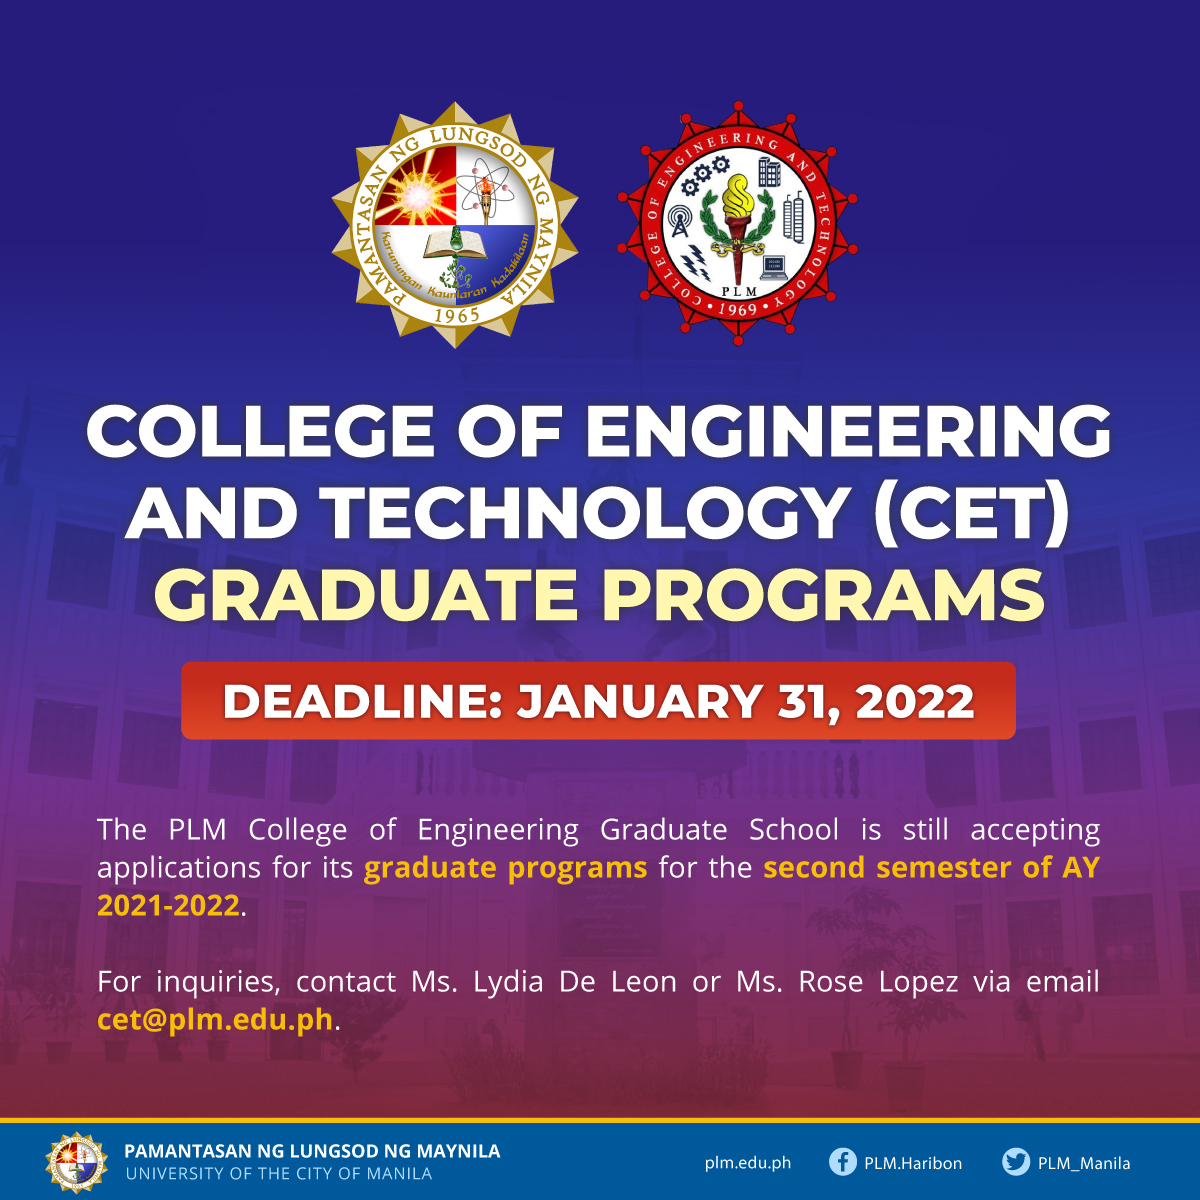 PLM College of Engineering Graduate School graduate programs